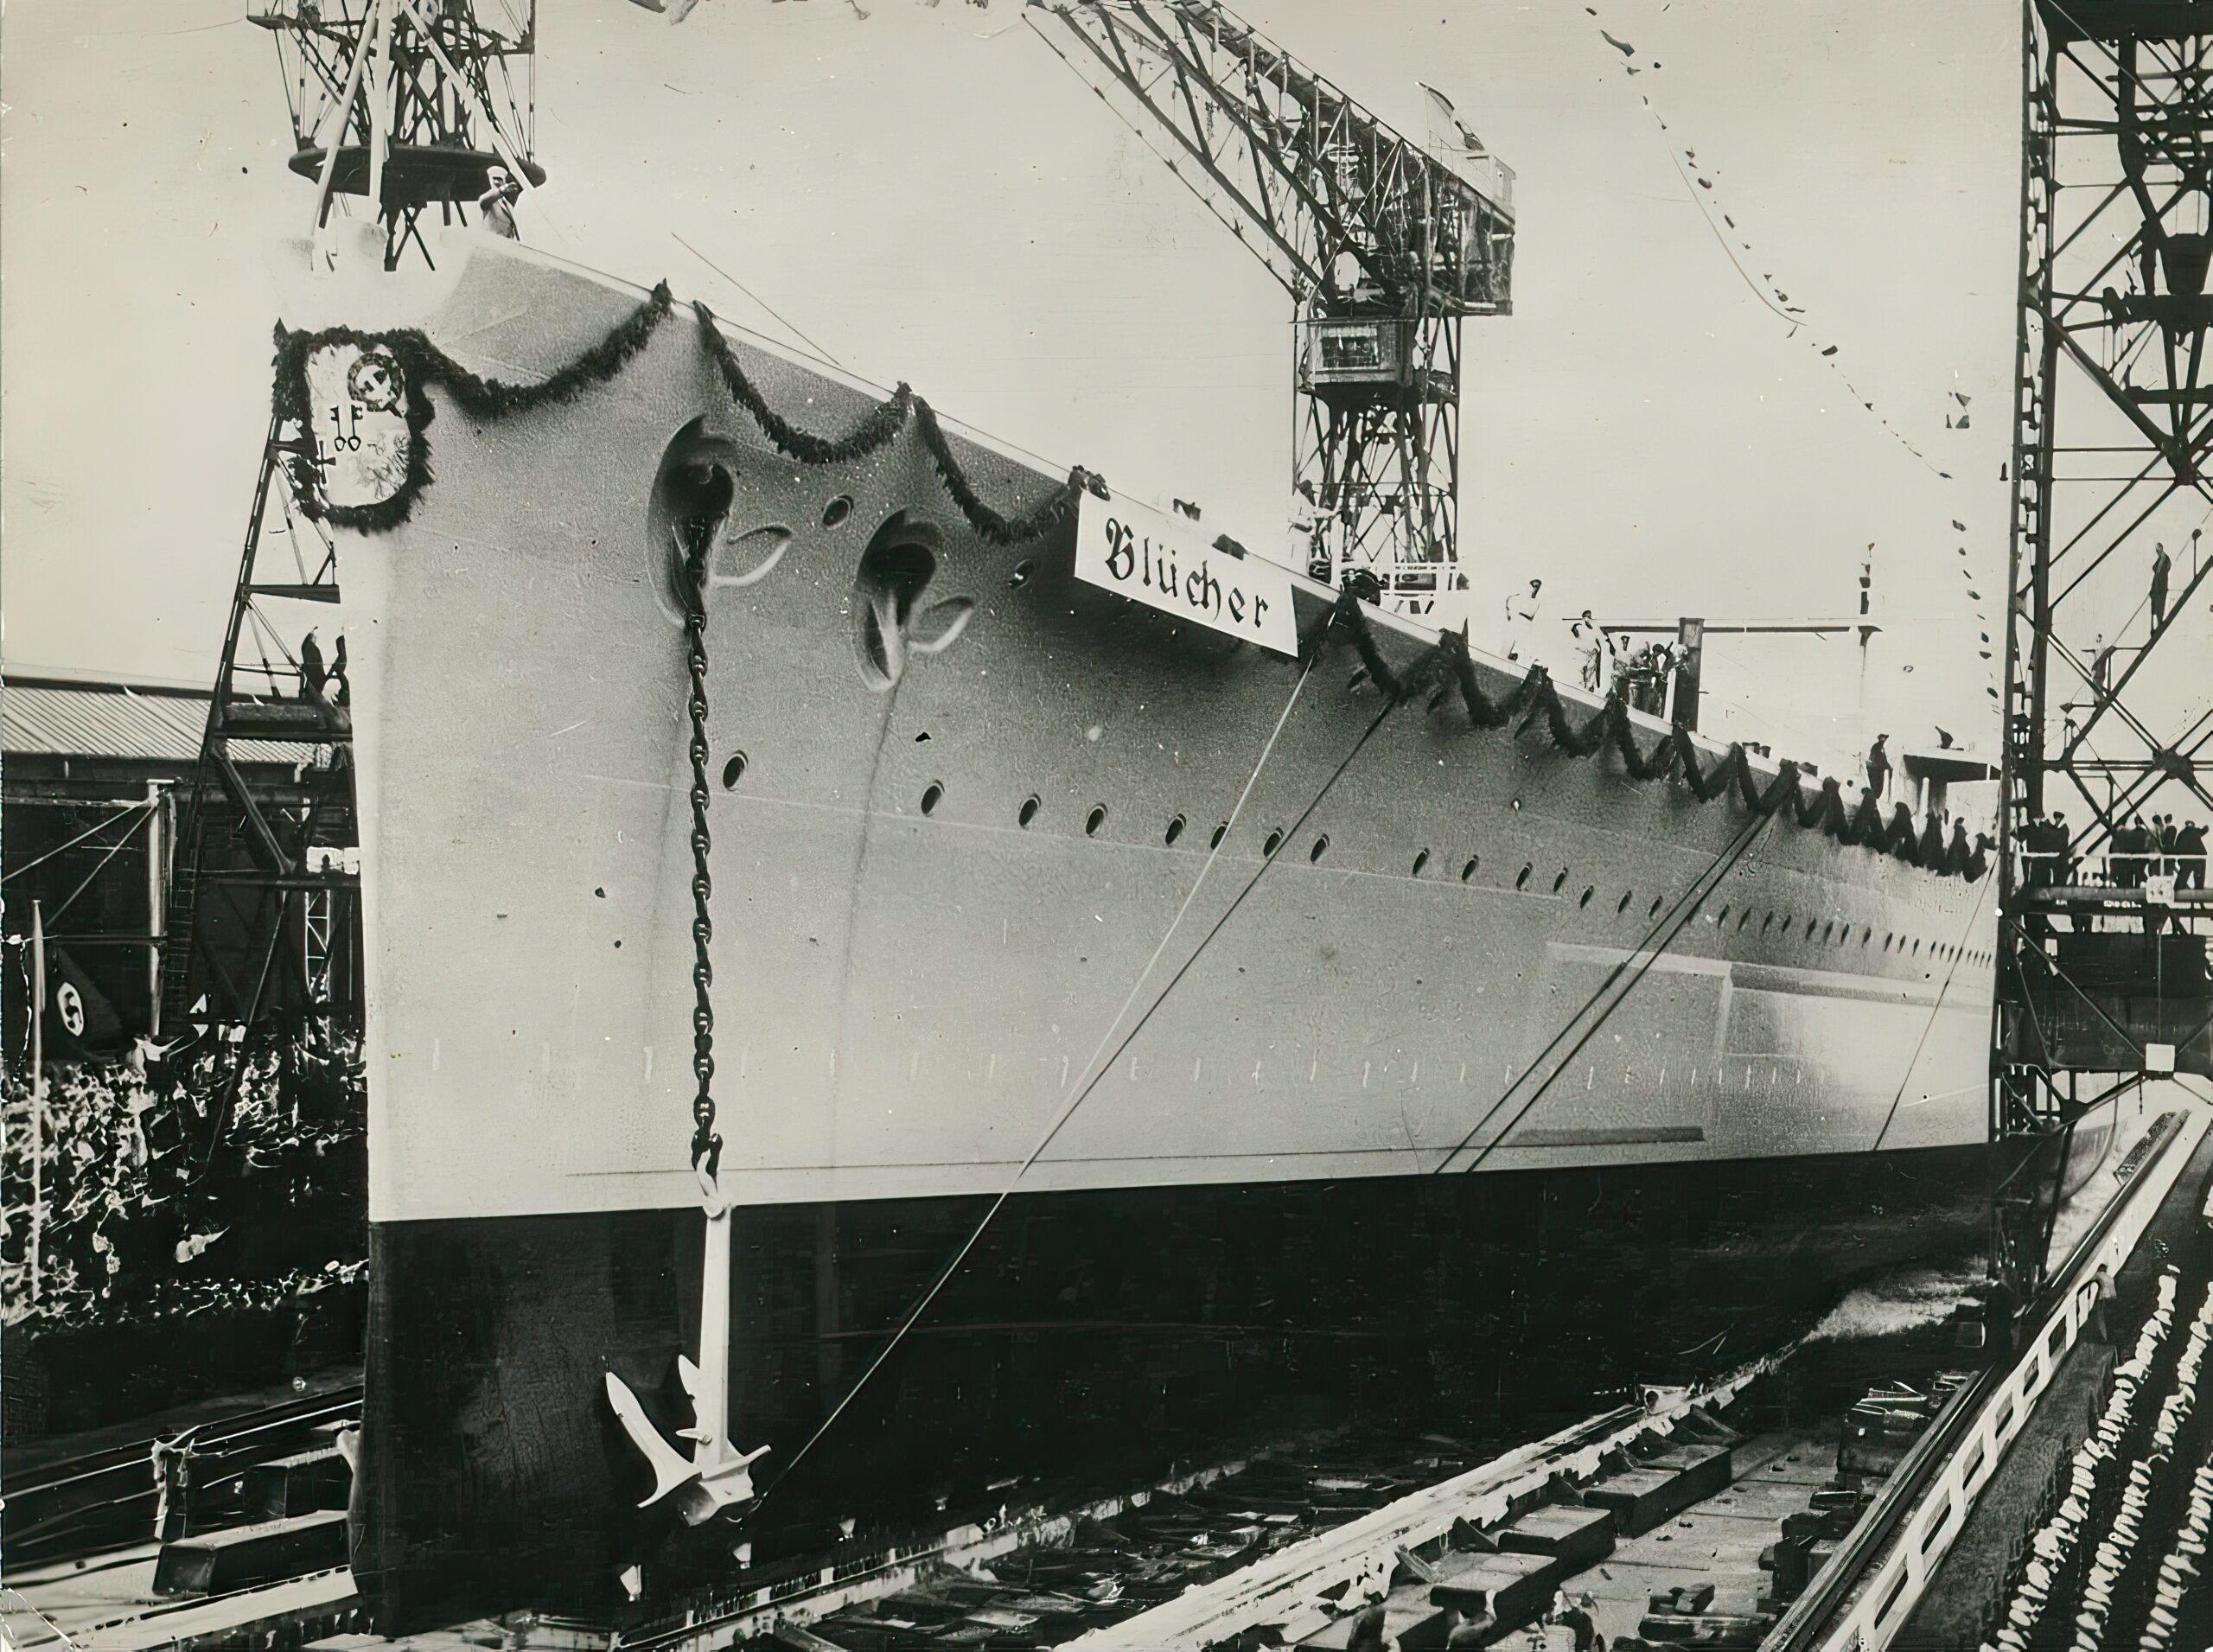 Blücher launching at Kiel, June 8 1937